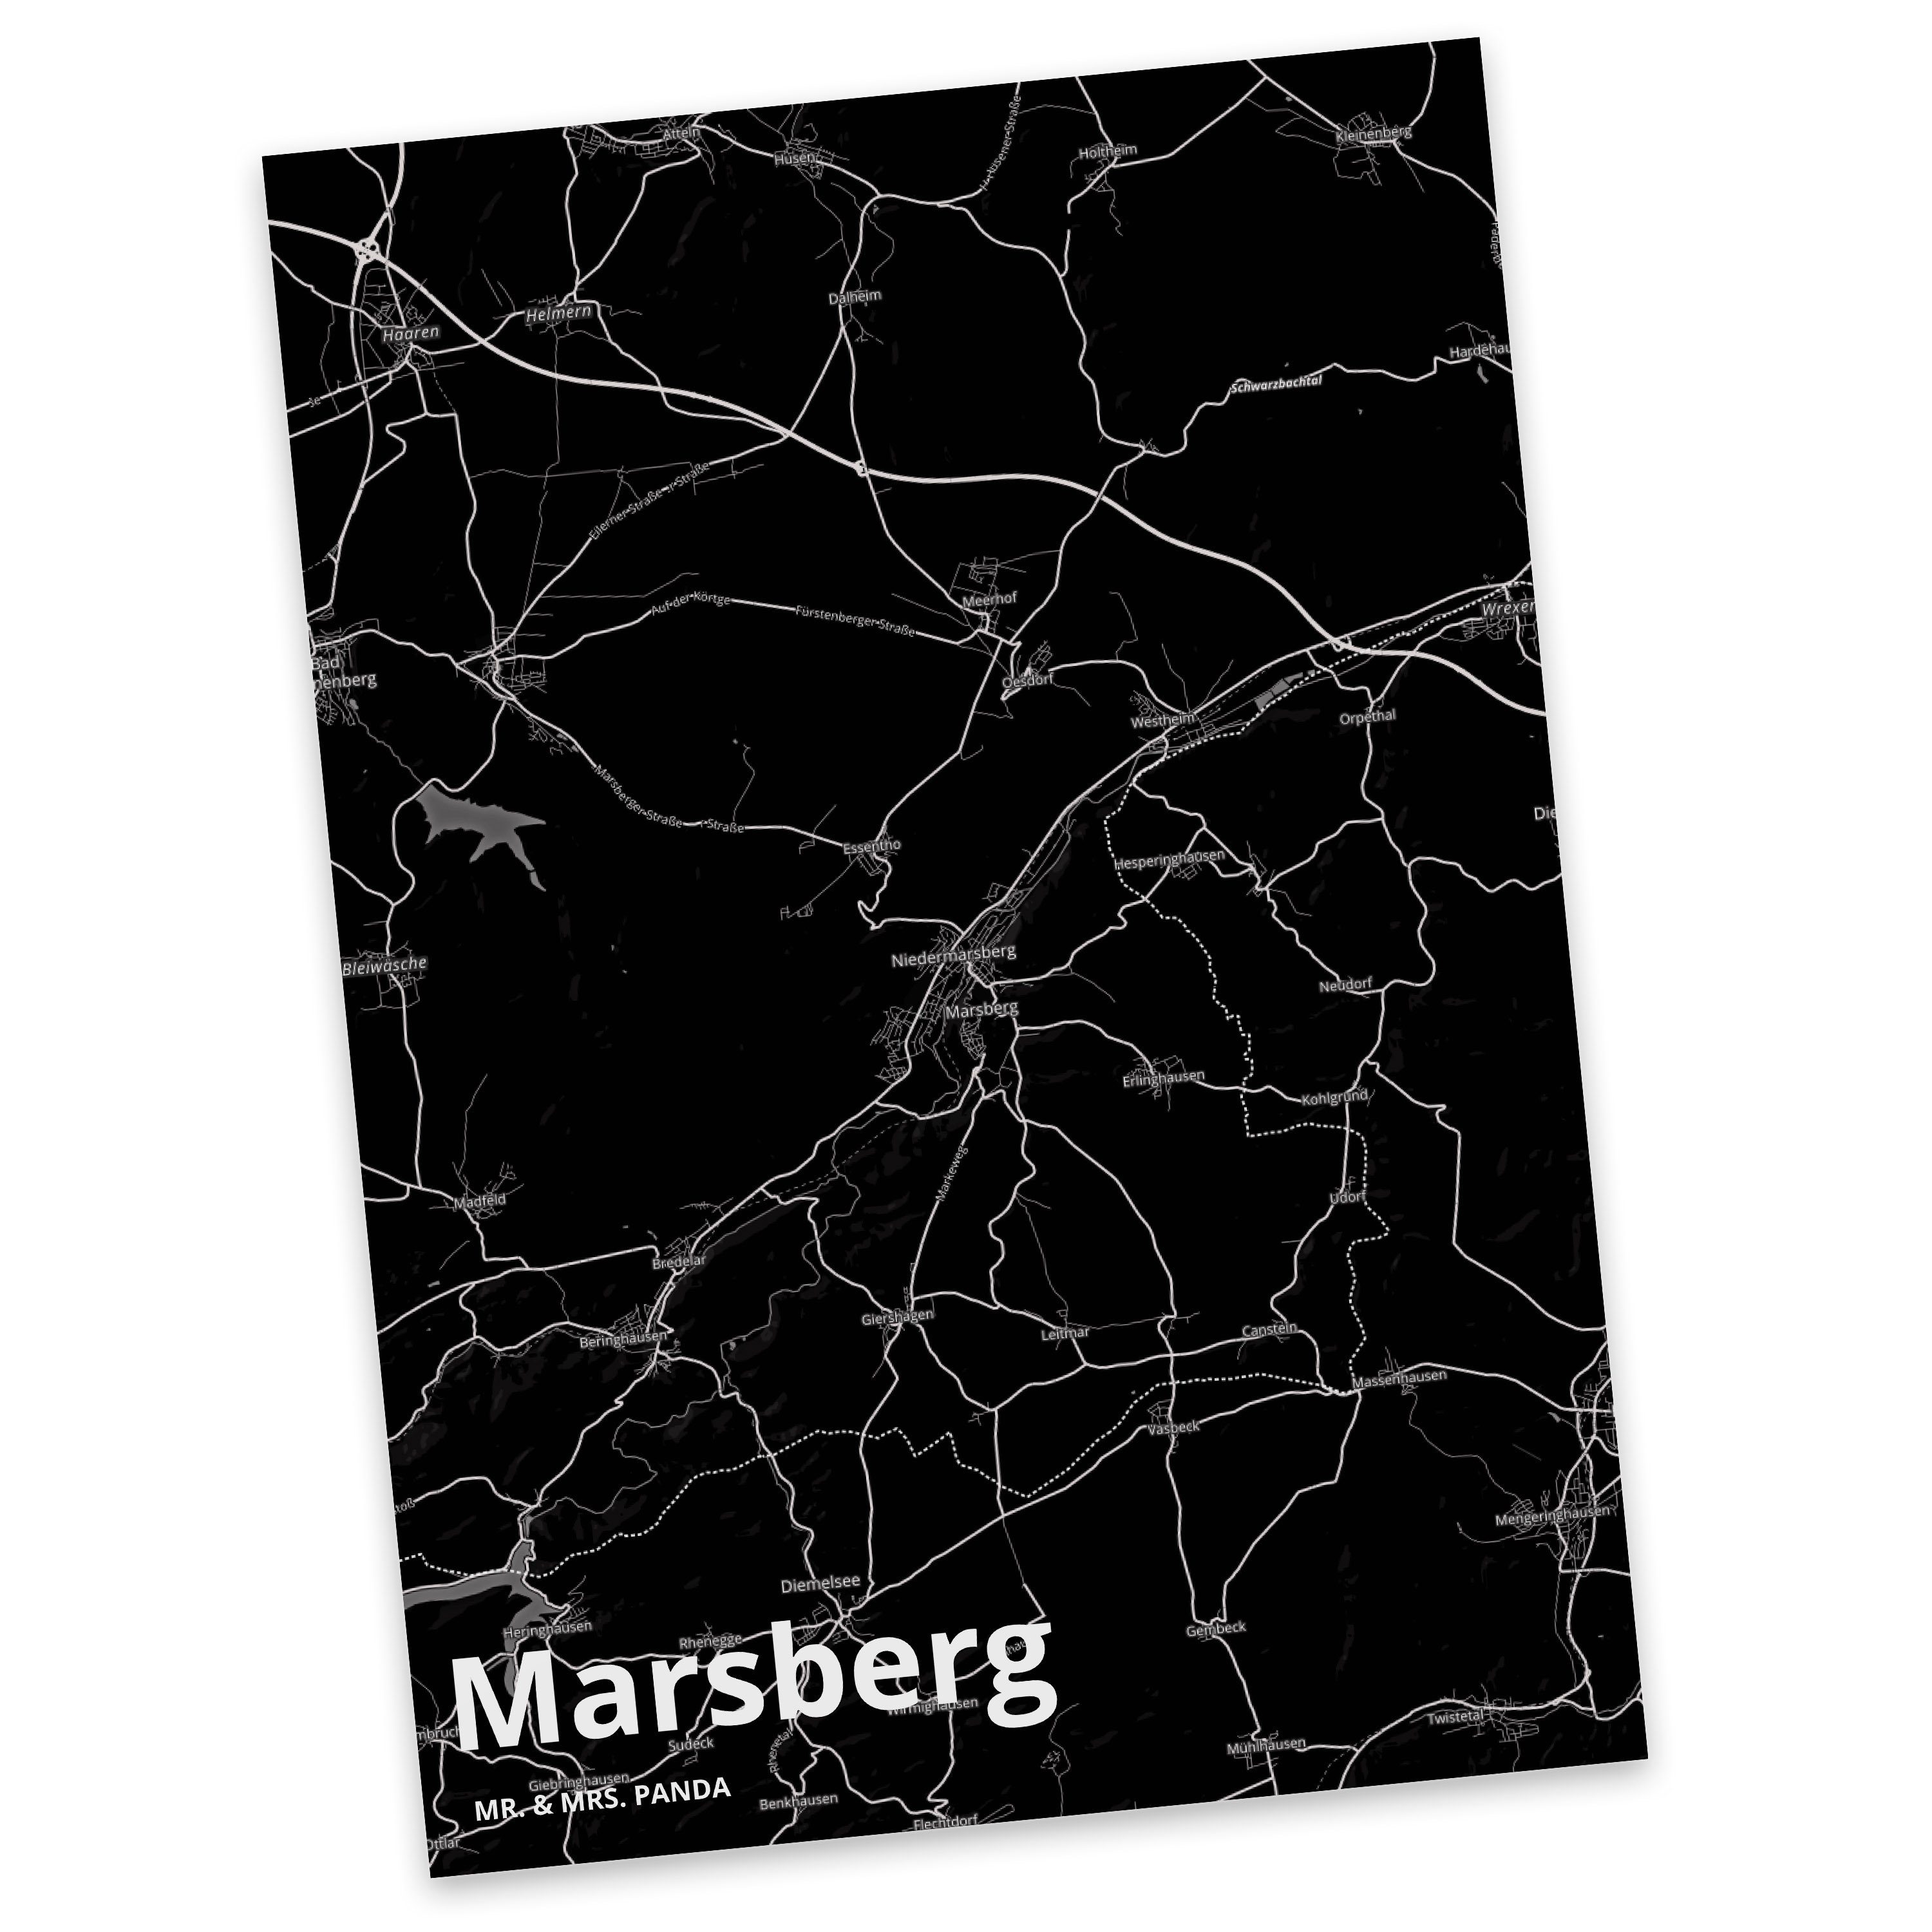 Mr. & Mrs. Panda Postkarte Marsberg - Geschenk, Ansichtskarte, Karte, Einladung, Dorf, Dankeskar | Grußkarten